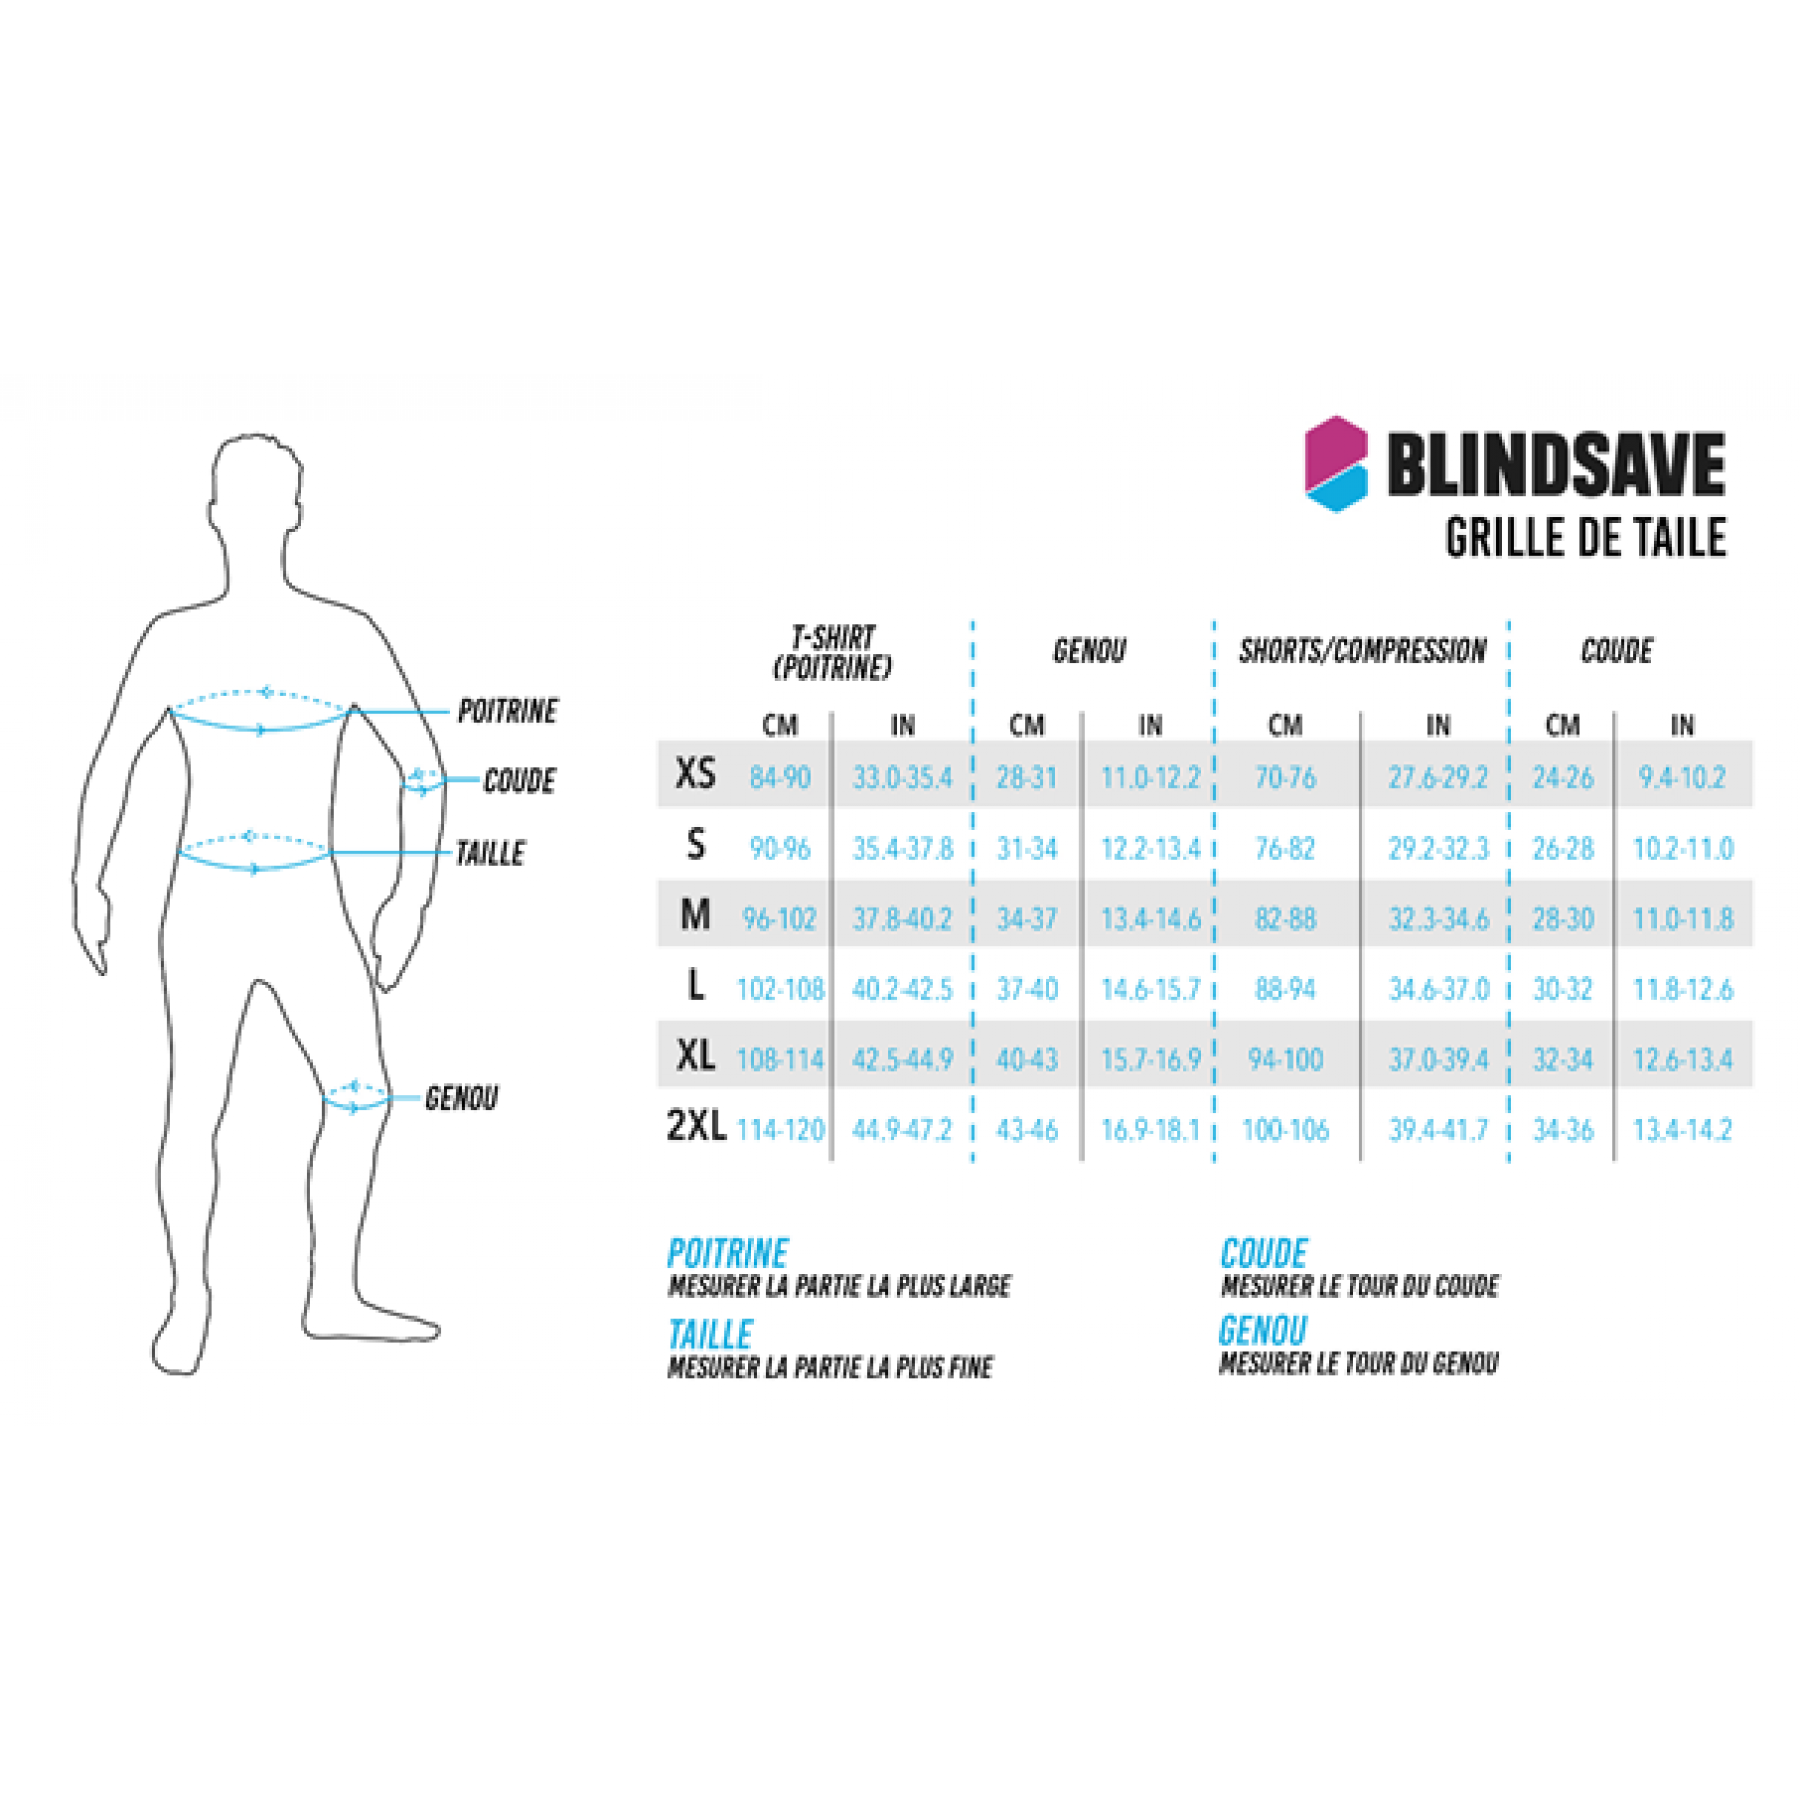 Pantalón corto de protección Blindsave Pro +